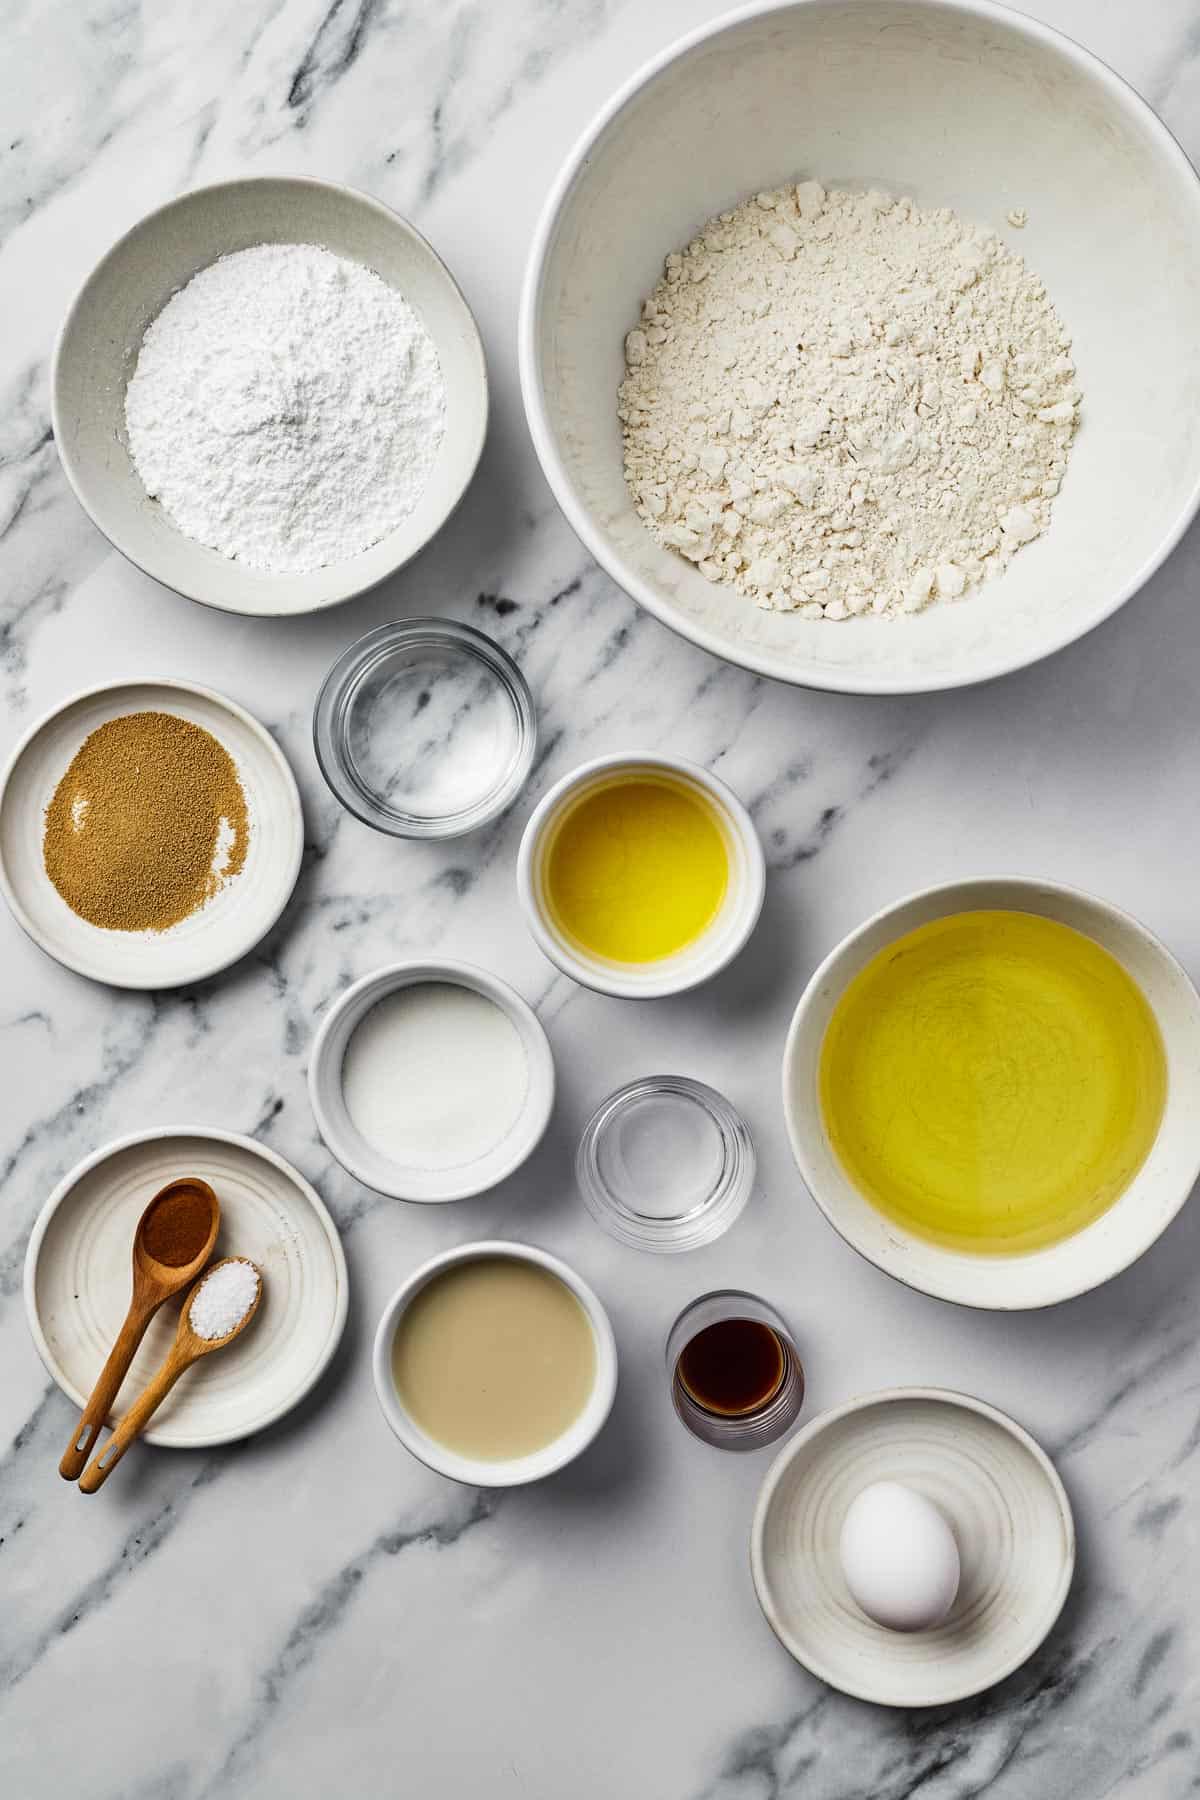 From top left: Powdered sugar, flour, yeast, water, melted butter, canola oil, sugar, vinegar, cinnamon, salt, brown sugar, vanilla, one egg.